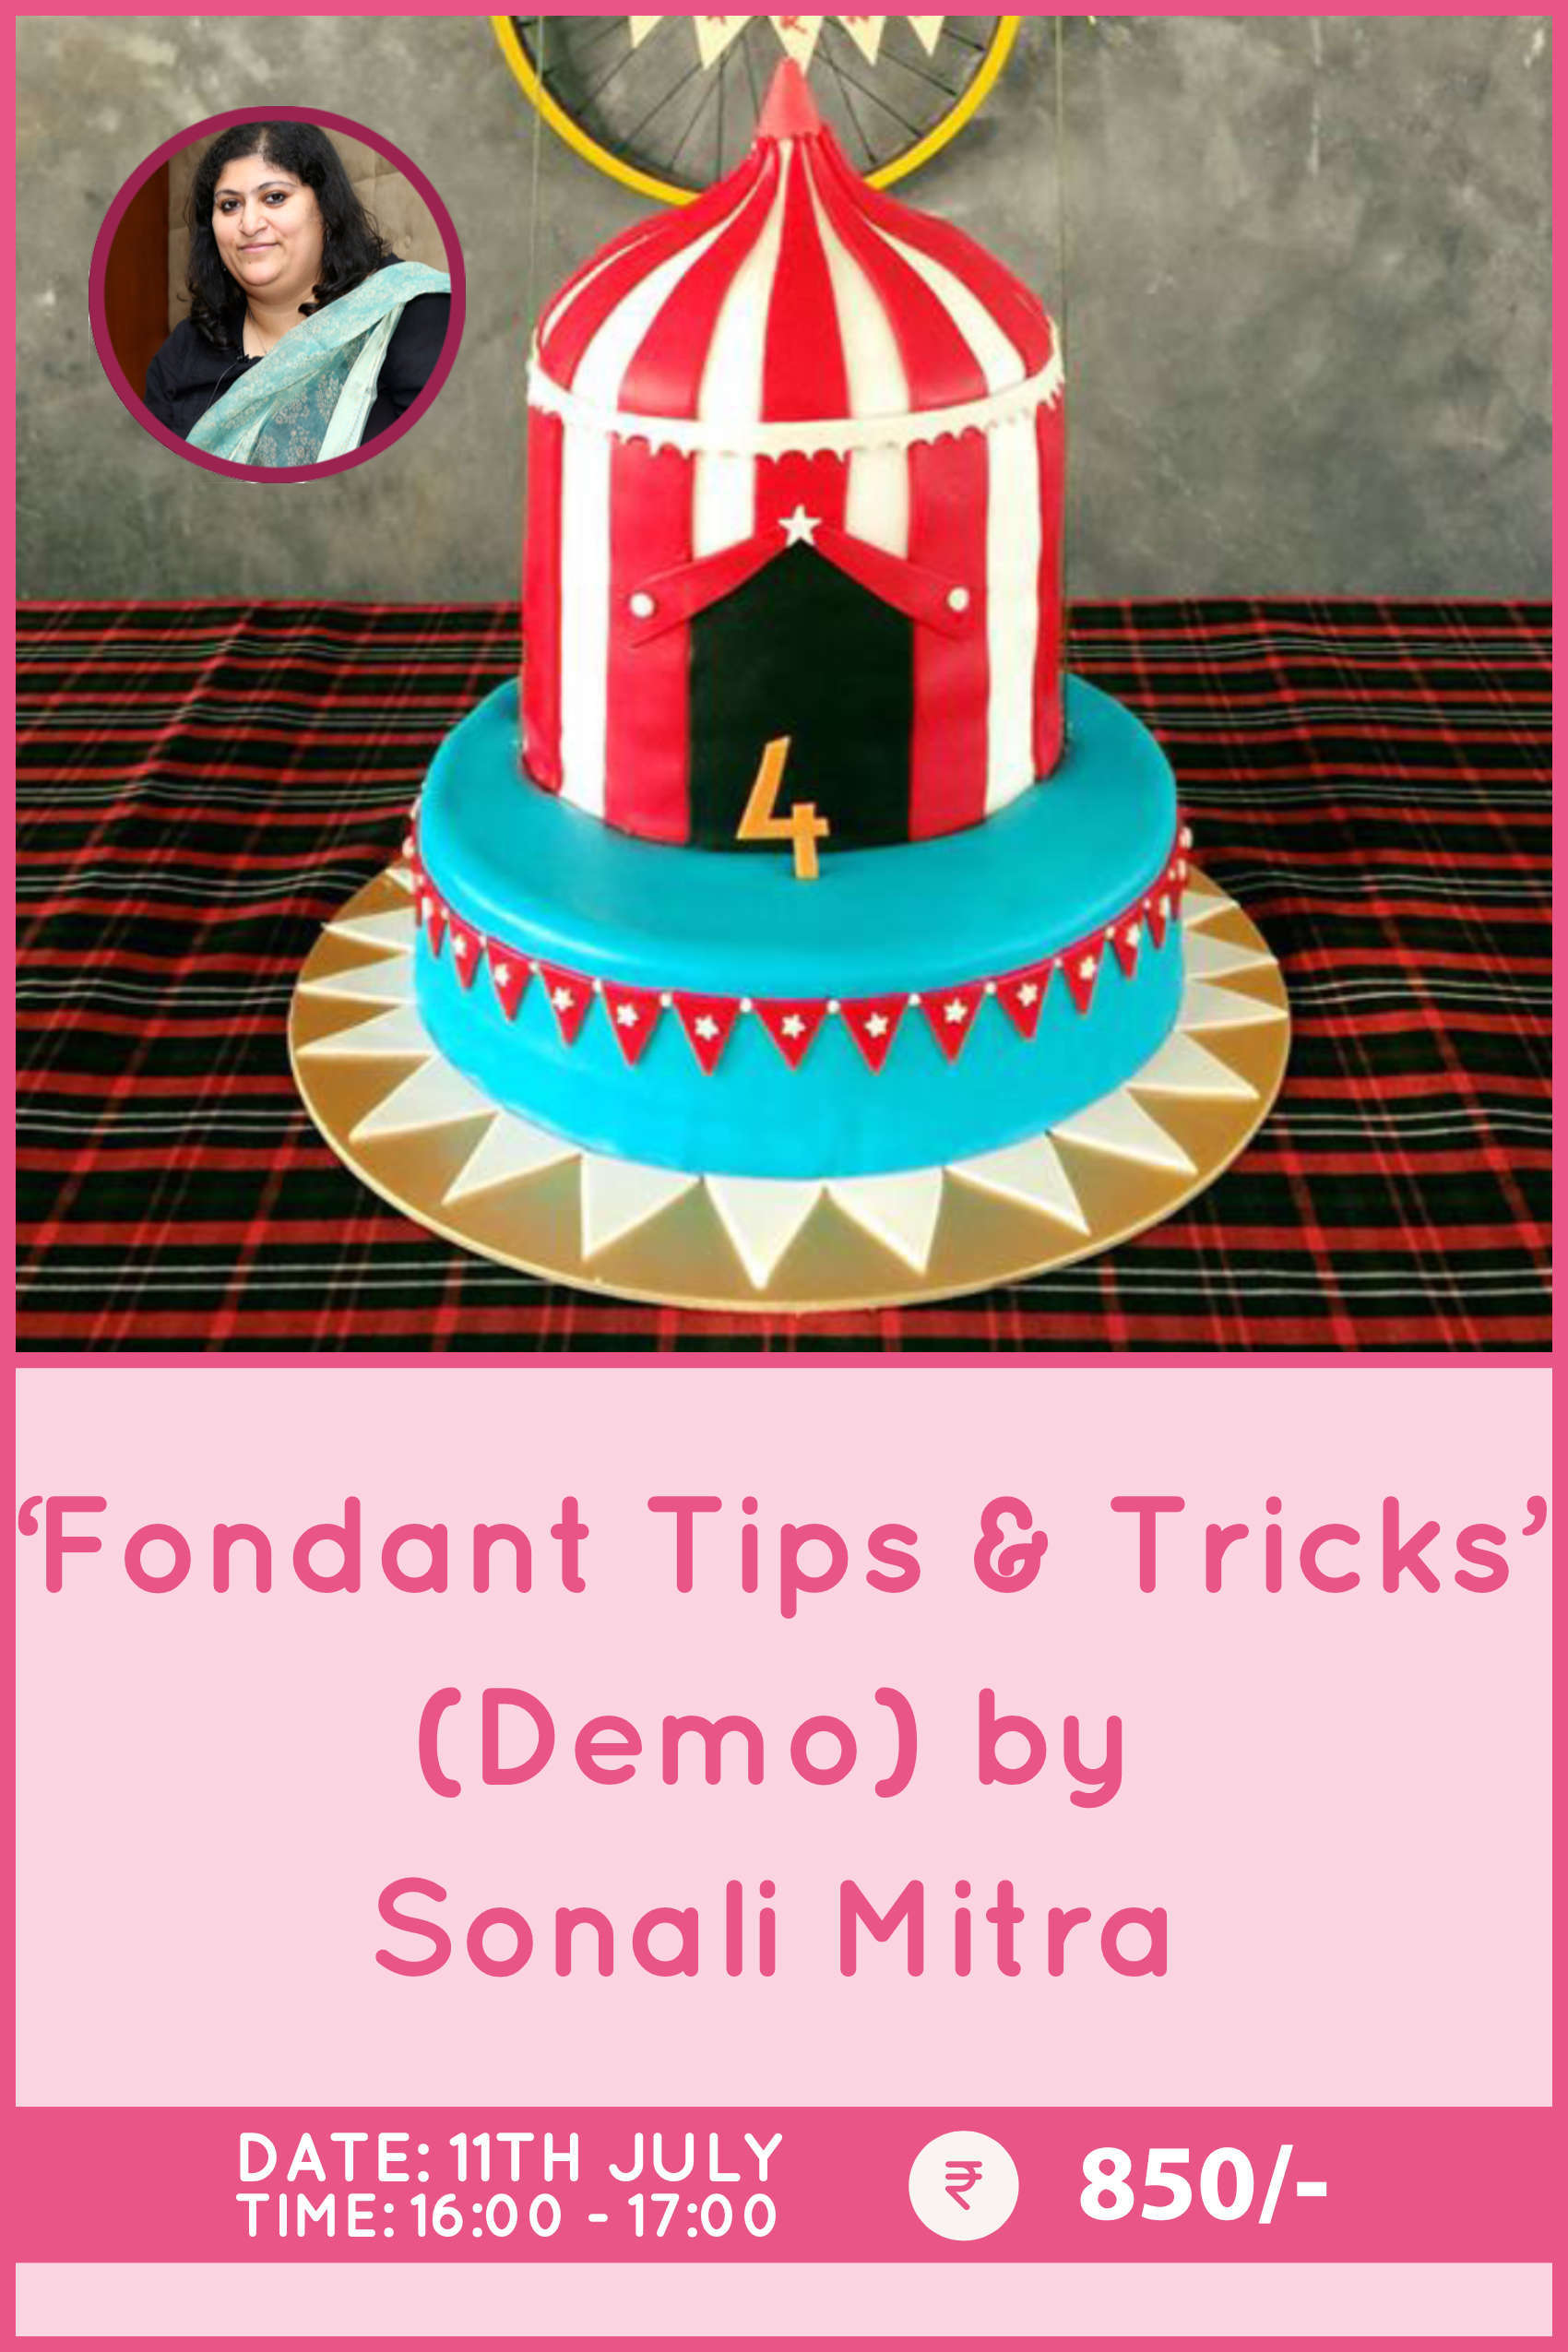 Fondant Tips & Tricks by Sonali Mitra